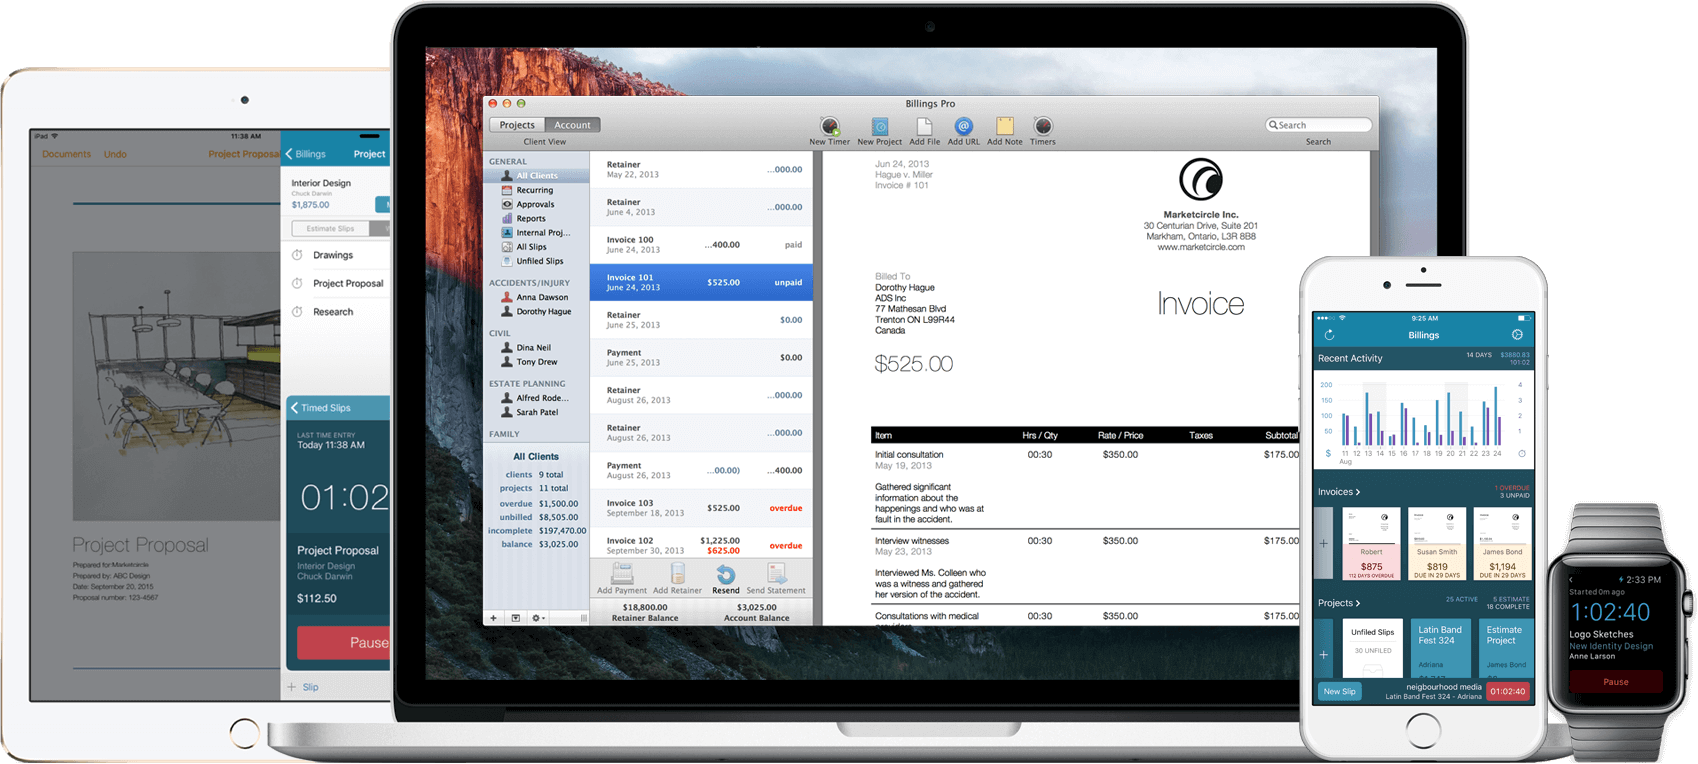 Billings Pro, time tracking app mac